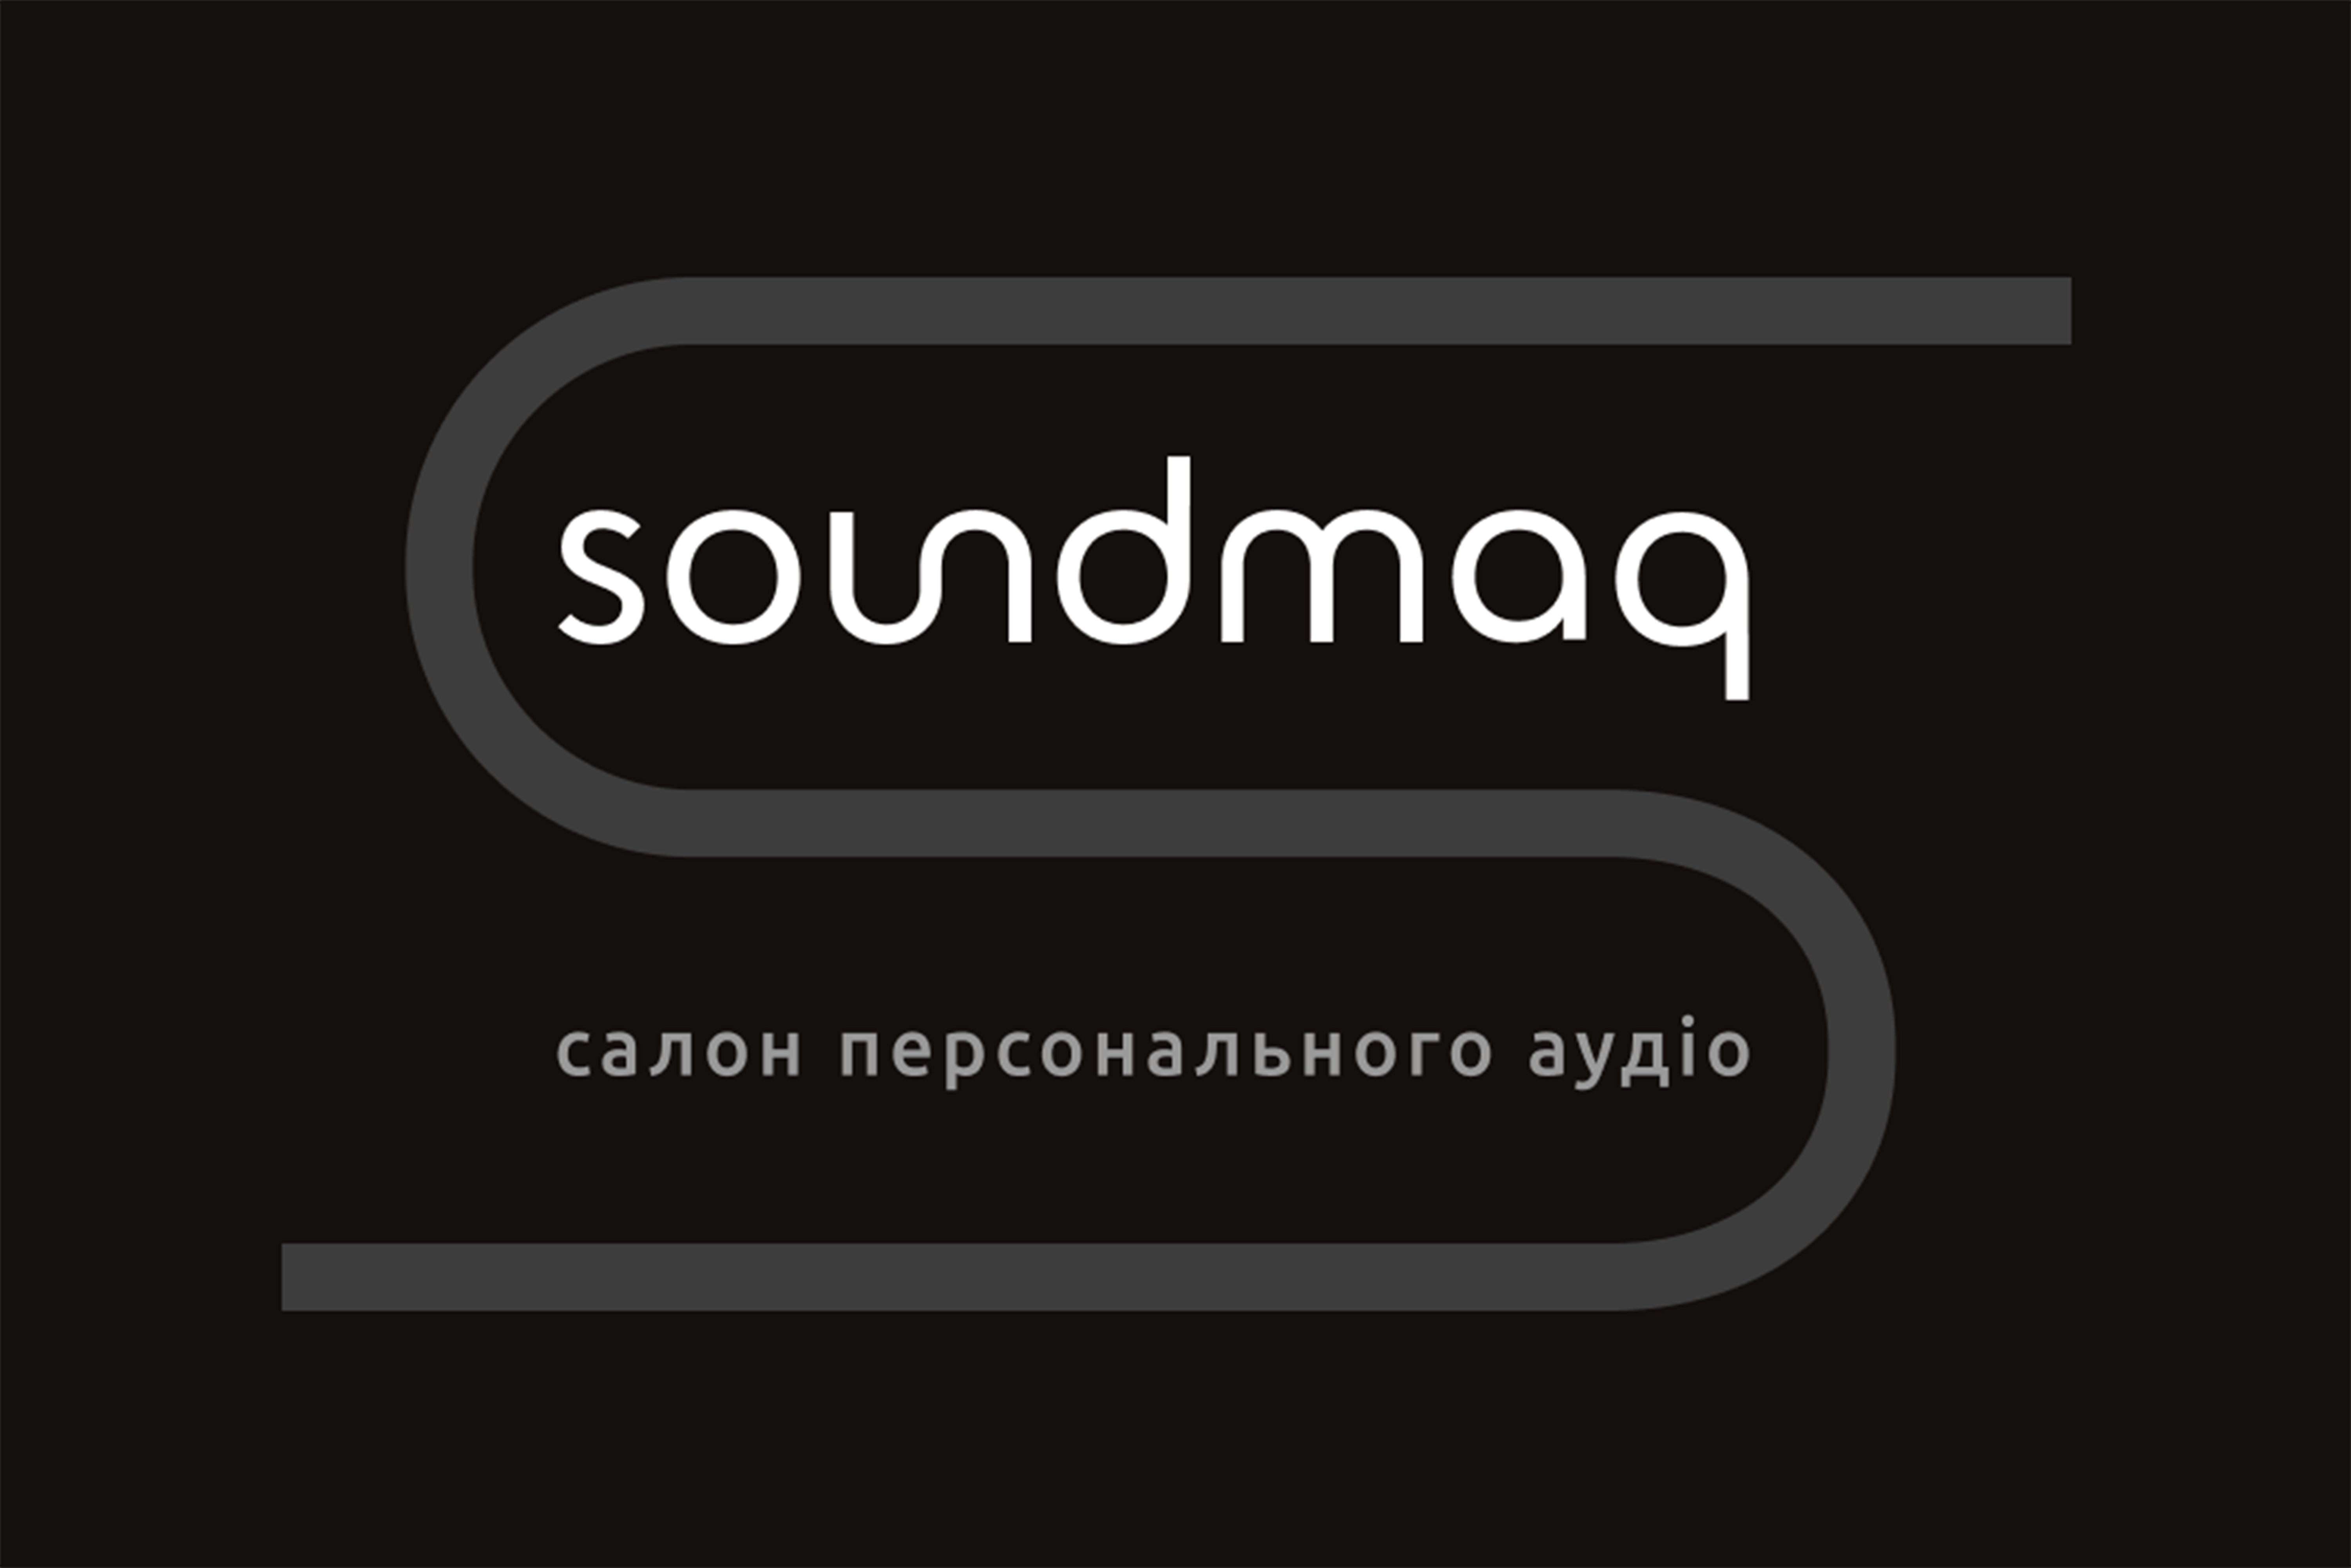 Soundmag